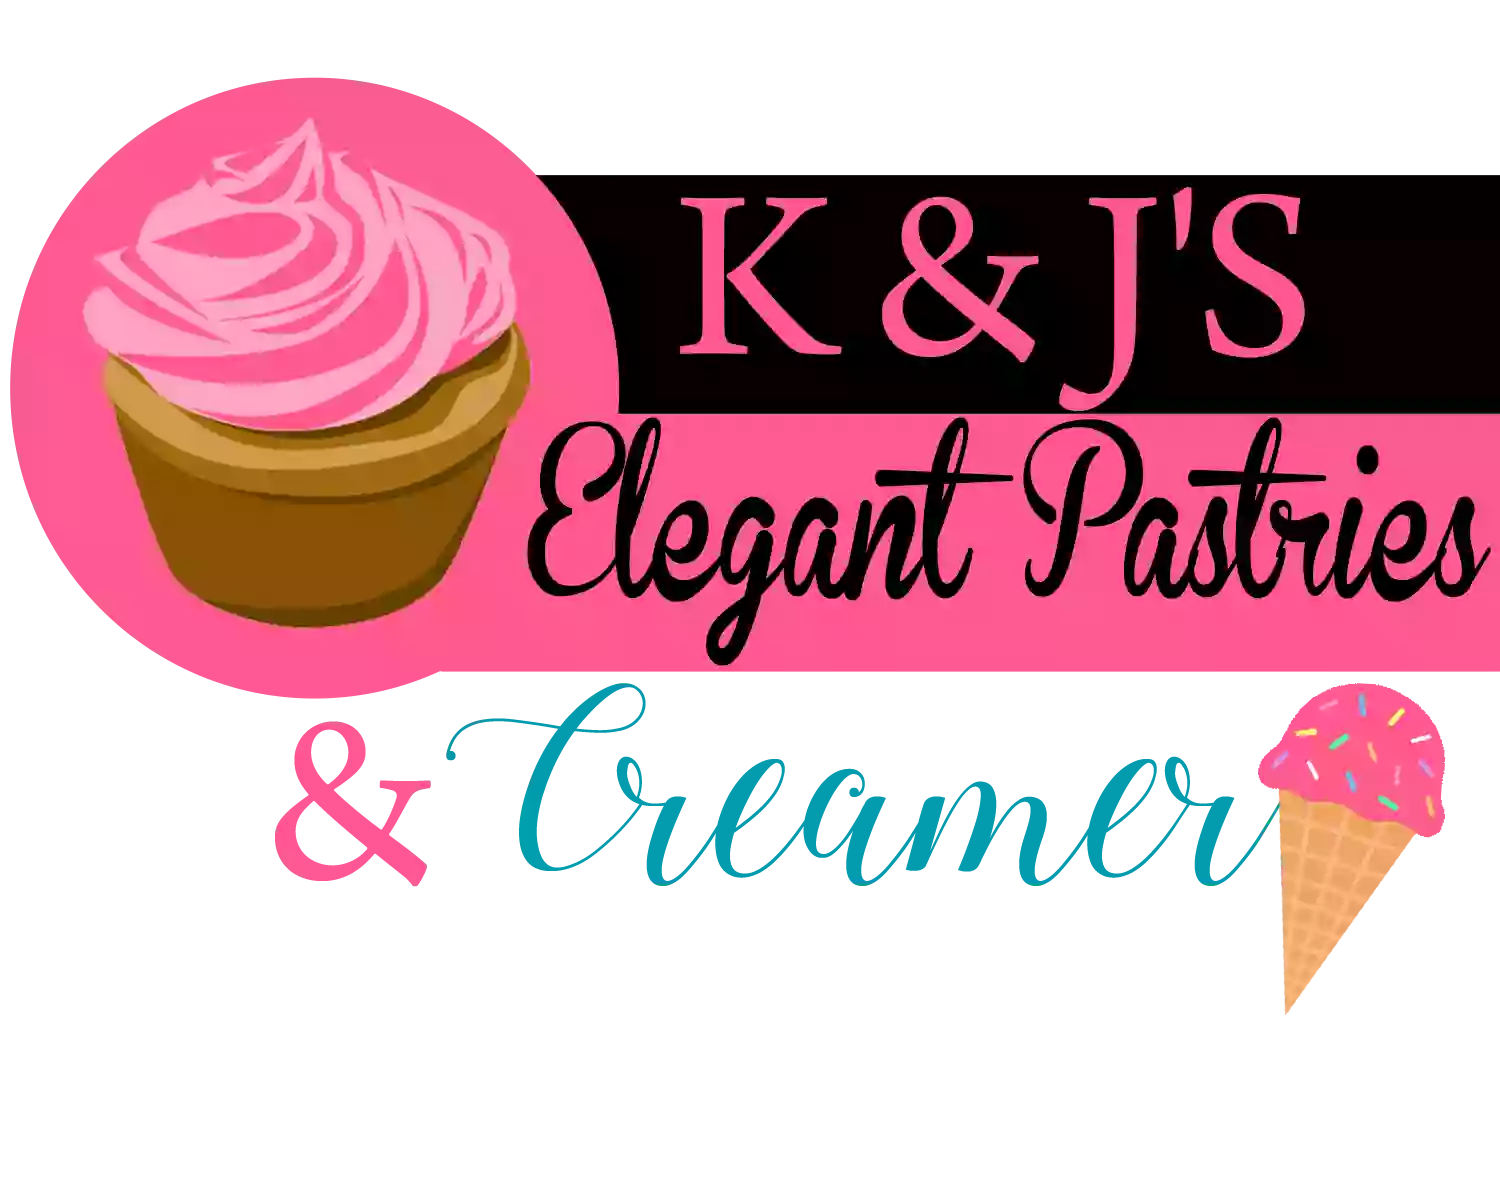 K & J's Elegant Pastries